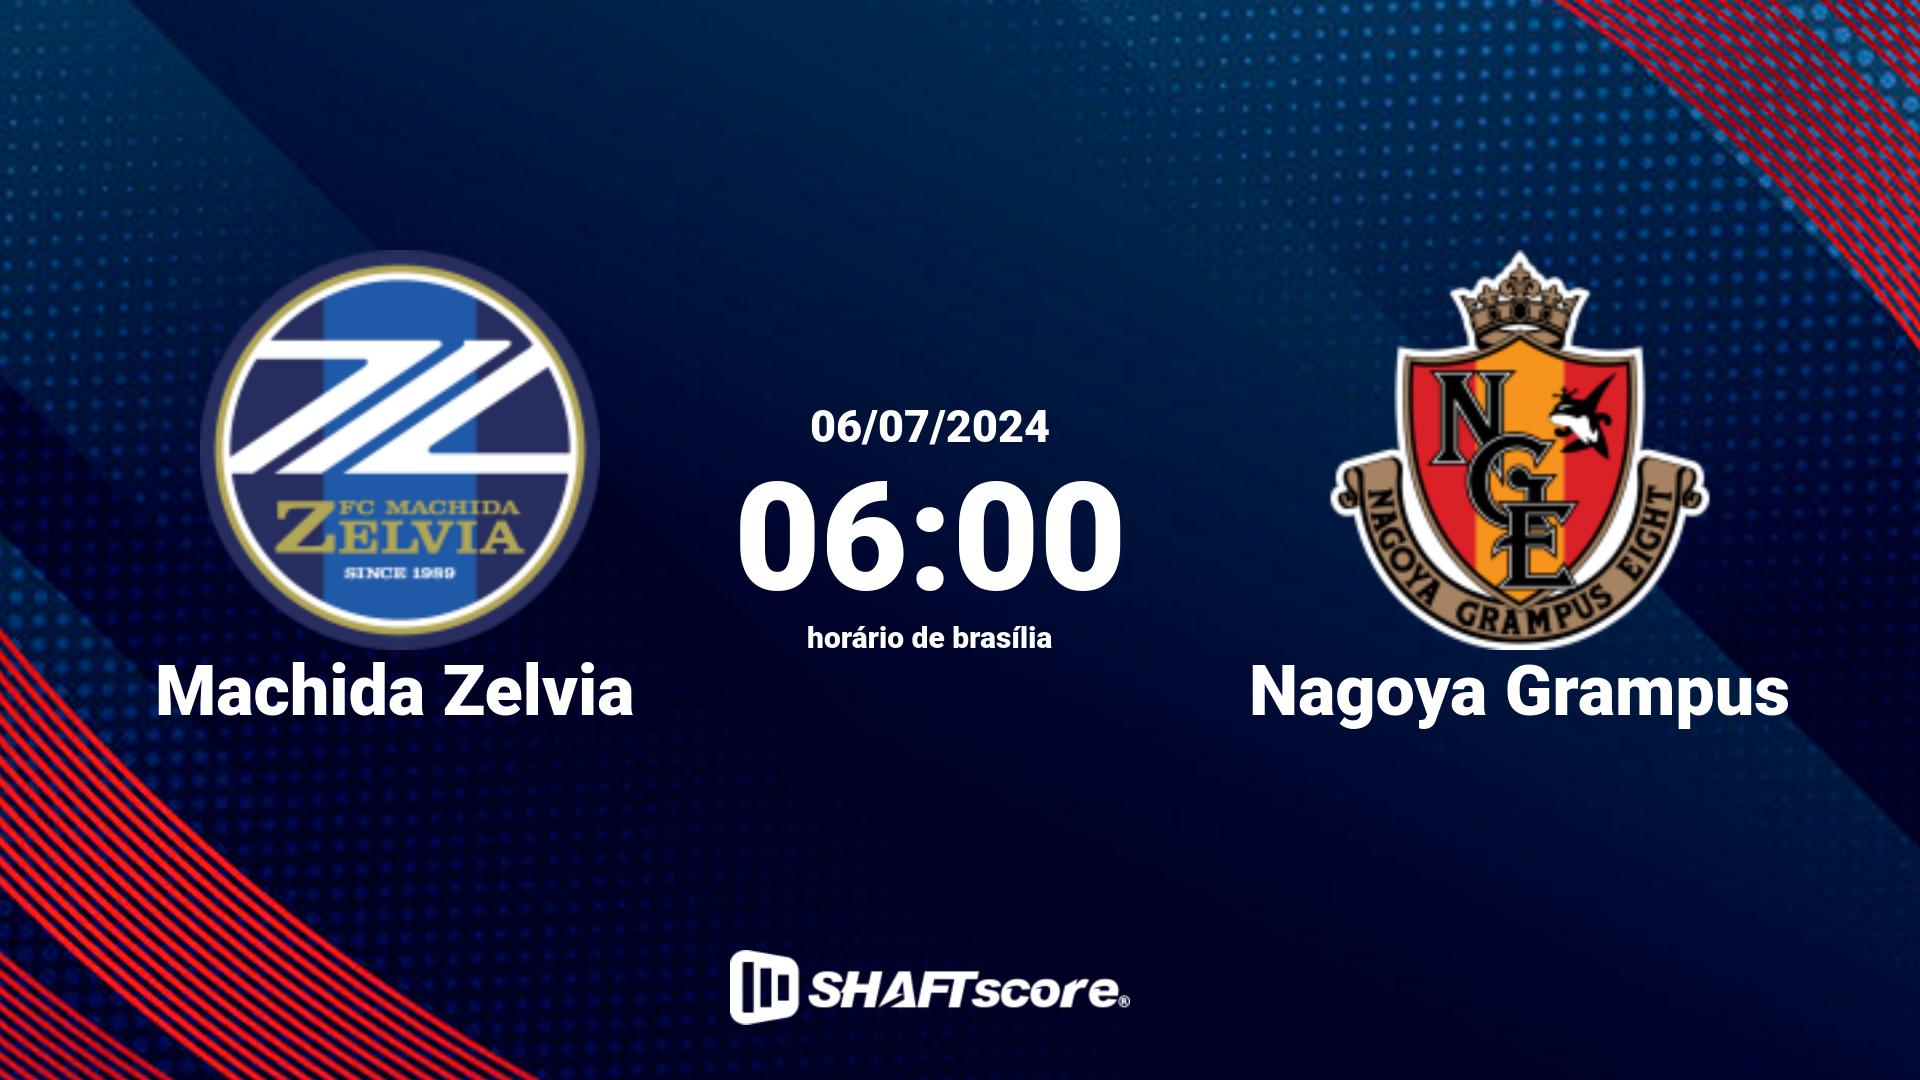 Estatísticas do jogo Machida Zelvia vs Nagoya Grampus 06.07 06:00